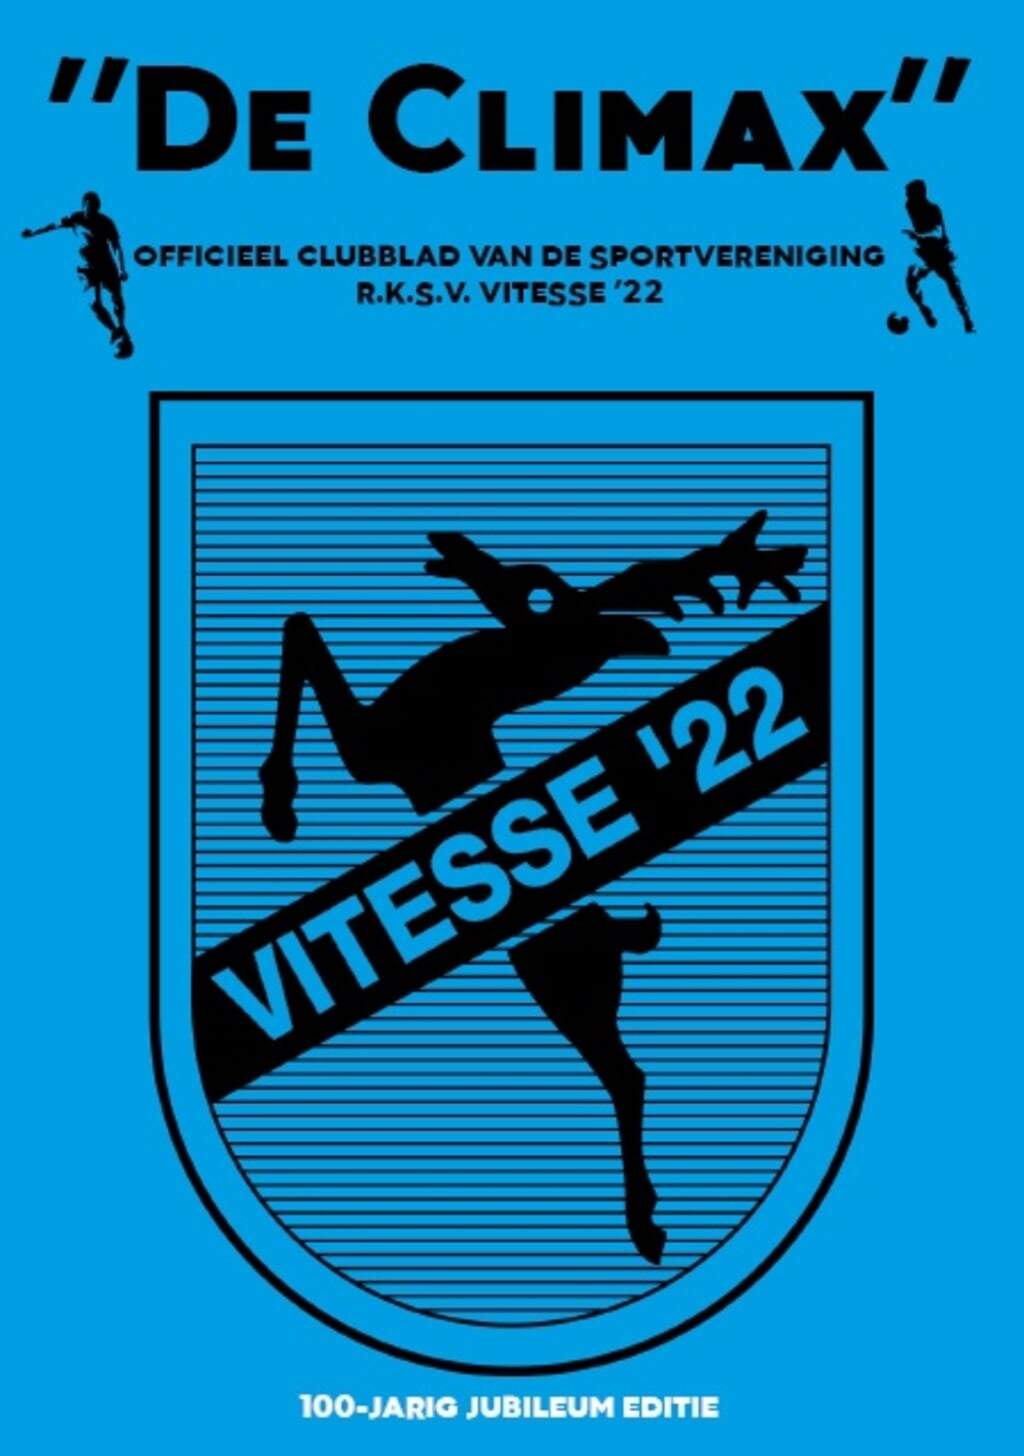 De Climax, officieel clubblad van de sportvereniging R.K.S.V Vitesse'22.